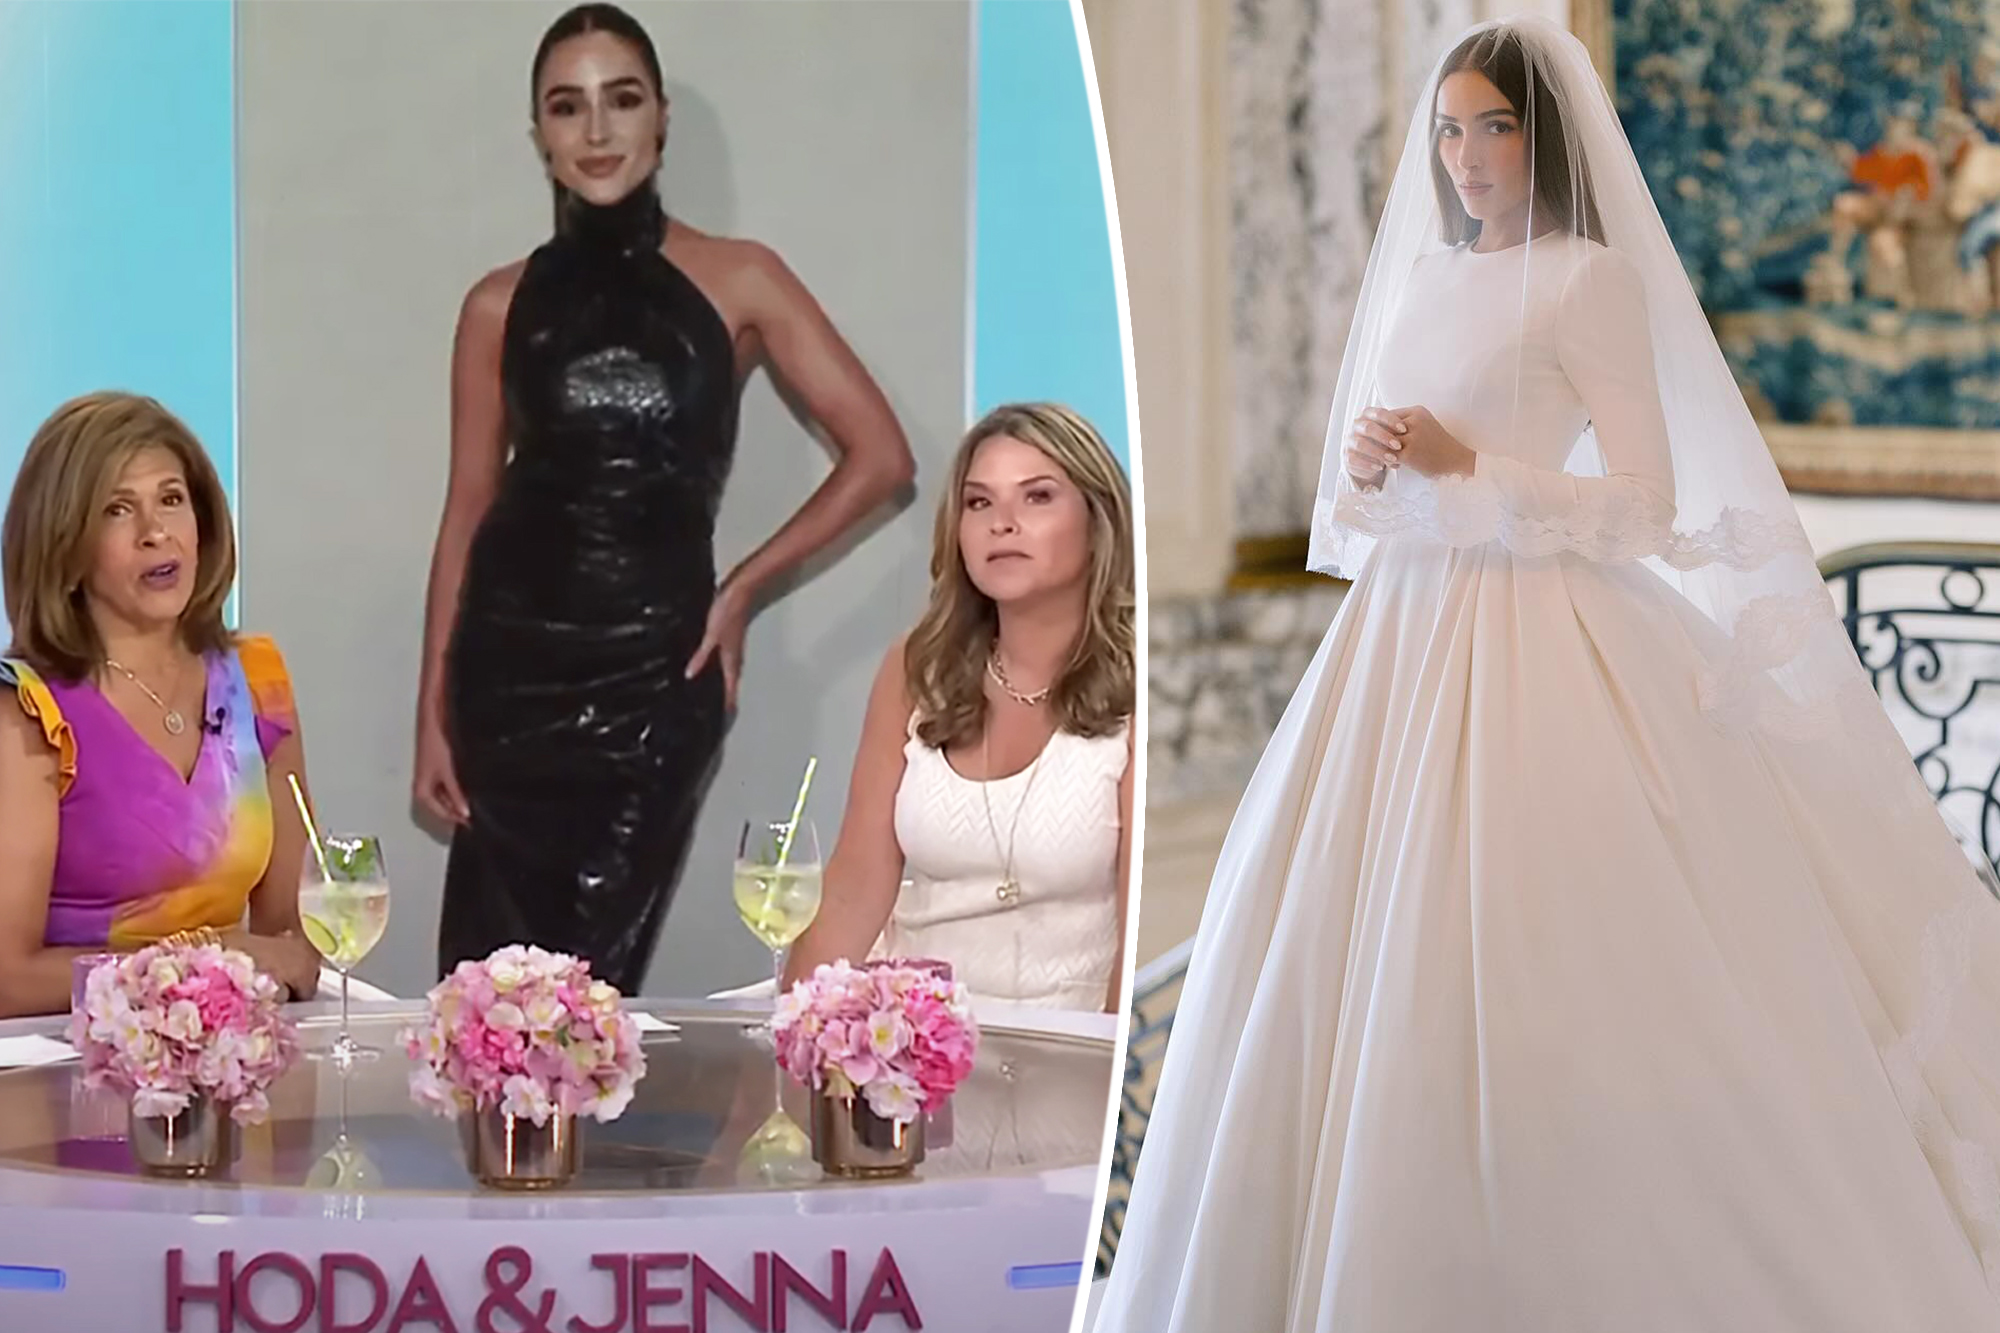 Hoda Kotb and Jenna Bush Hager Rally Behind Olivia Culpo's Wedding Dress Amid Criticism: Here's Why You Shouldn't Judge